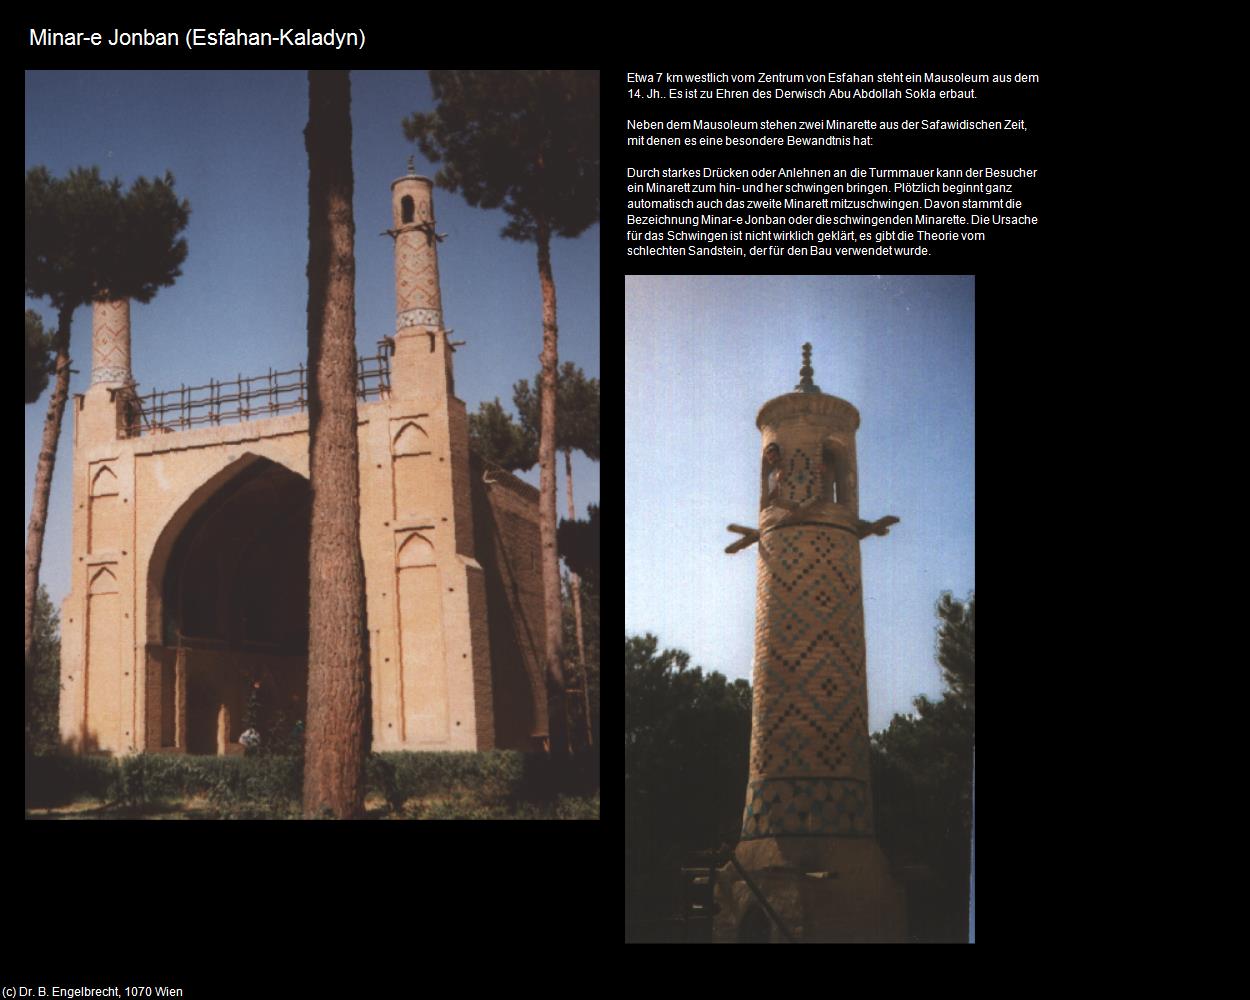 Minar-e Jonban (Kaladyn) (Esfahan) in Iran